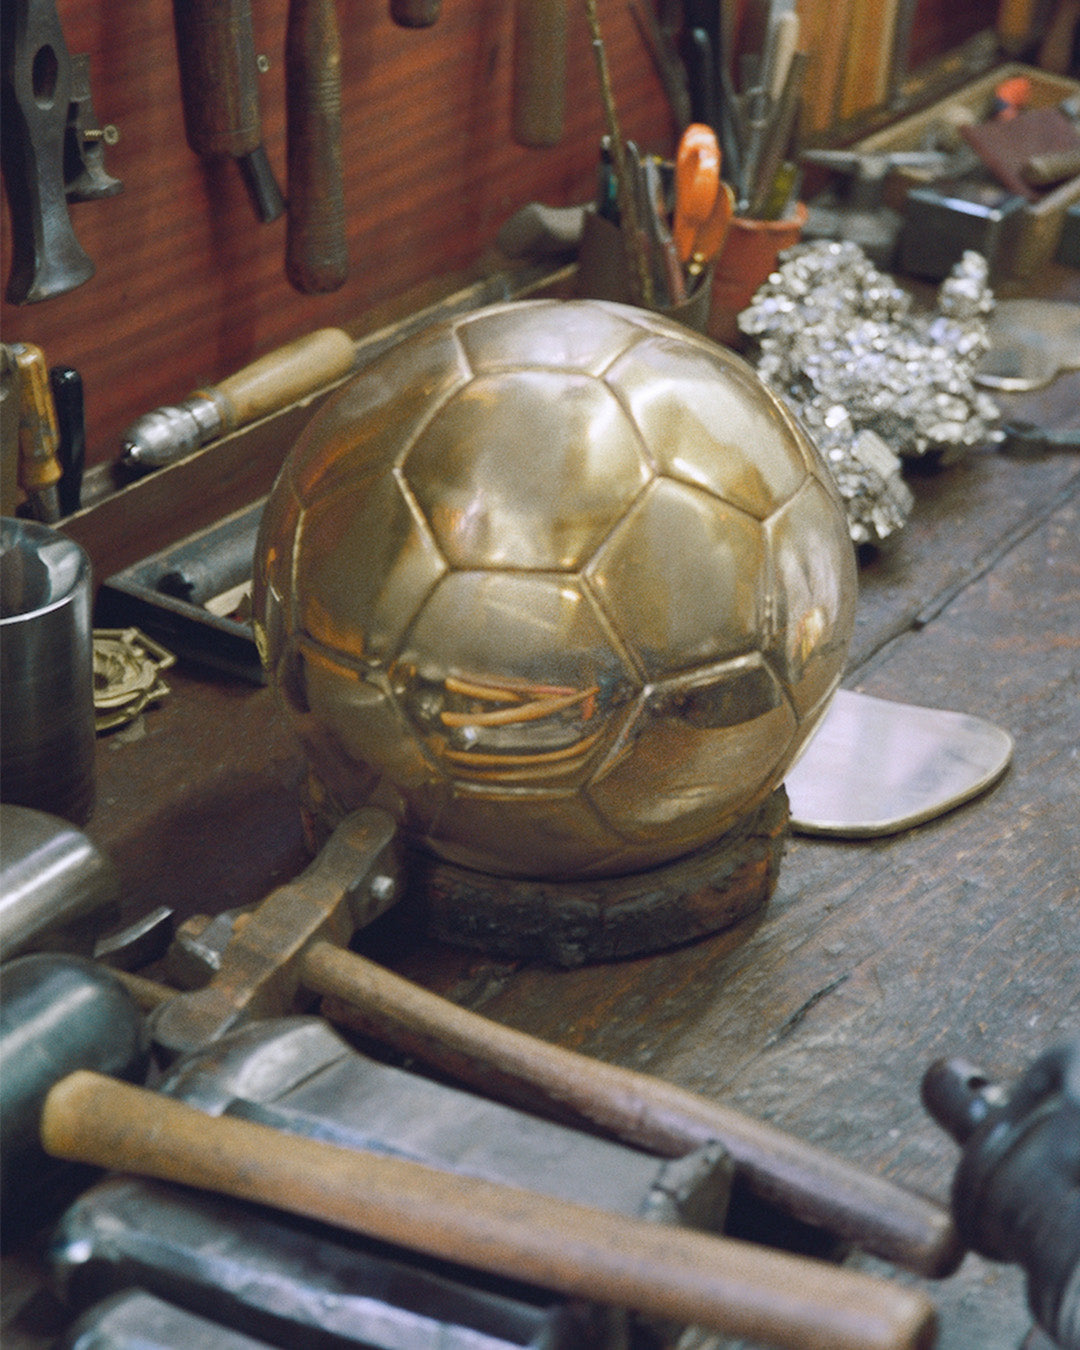 Le Ballon d'Or created by Mellerio